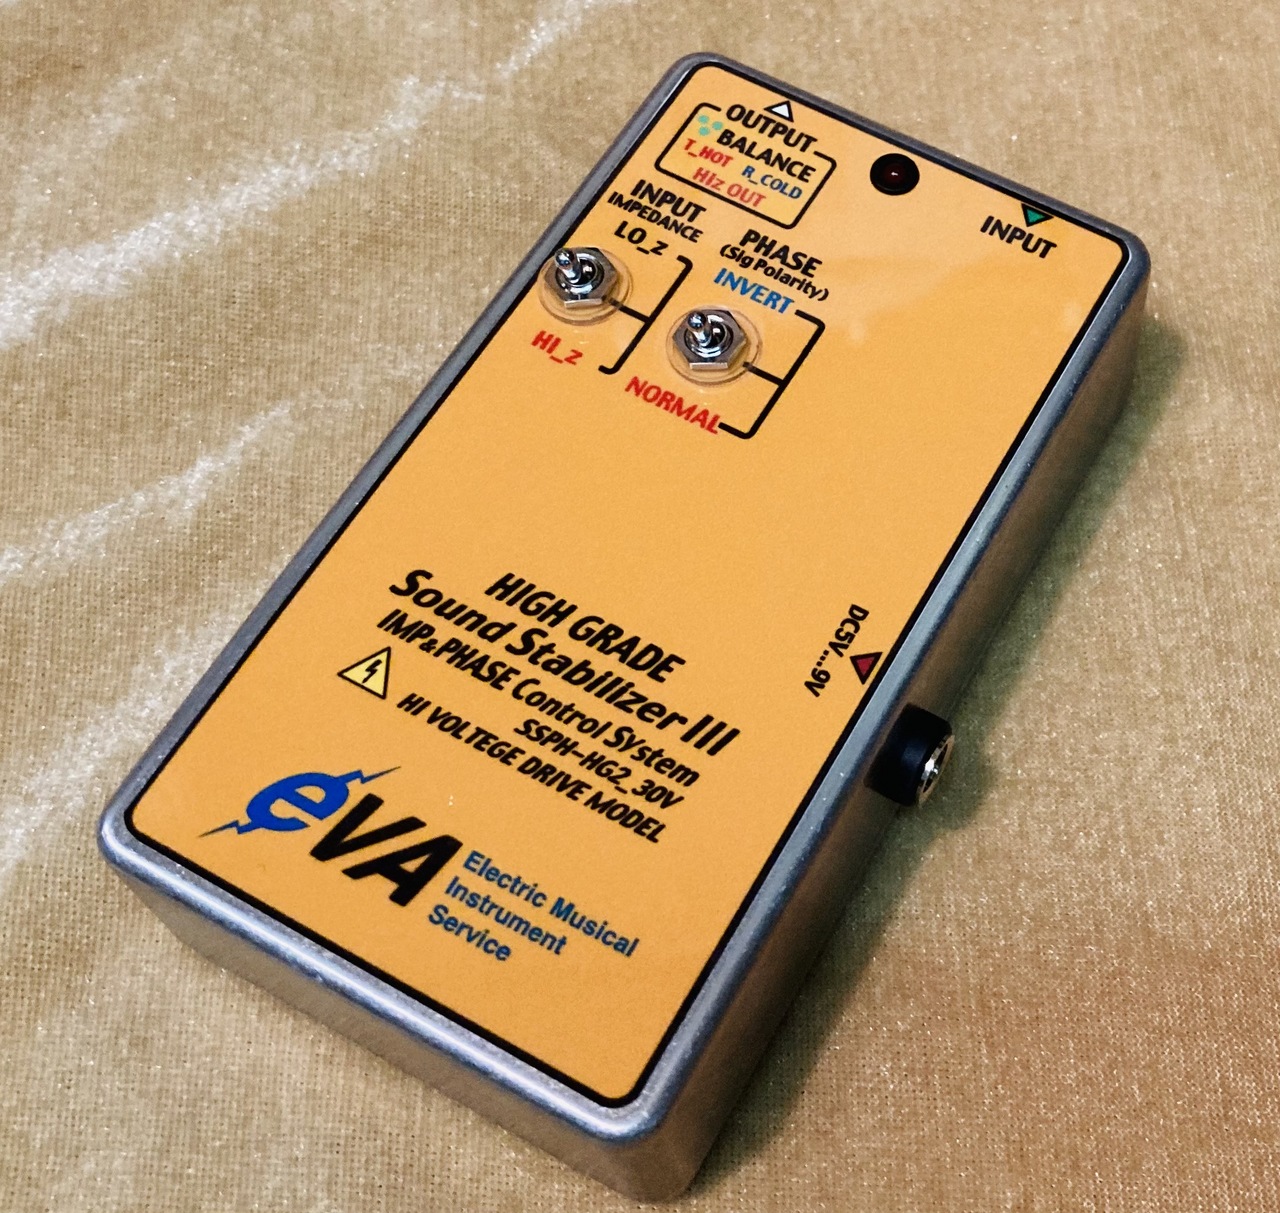 EVA電子　Sound Stabilizer Ⅲ